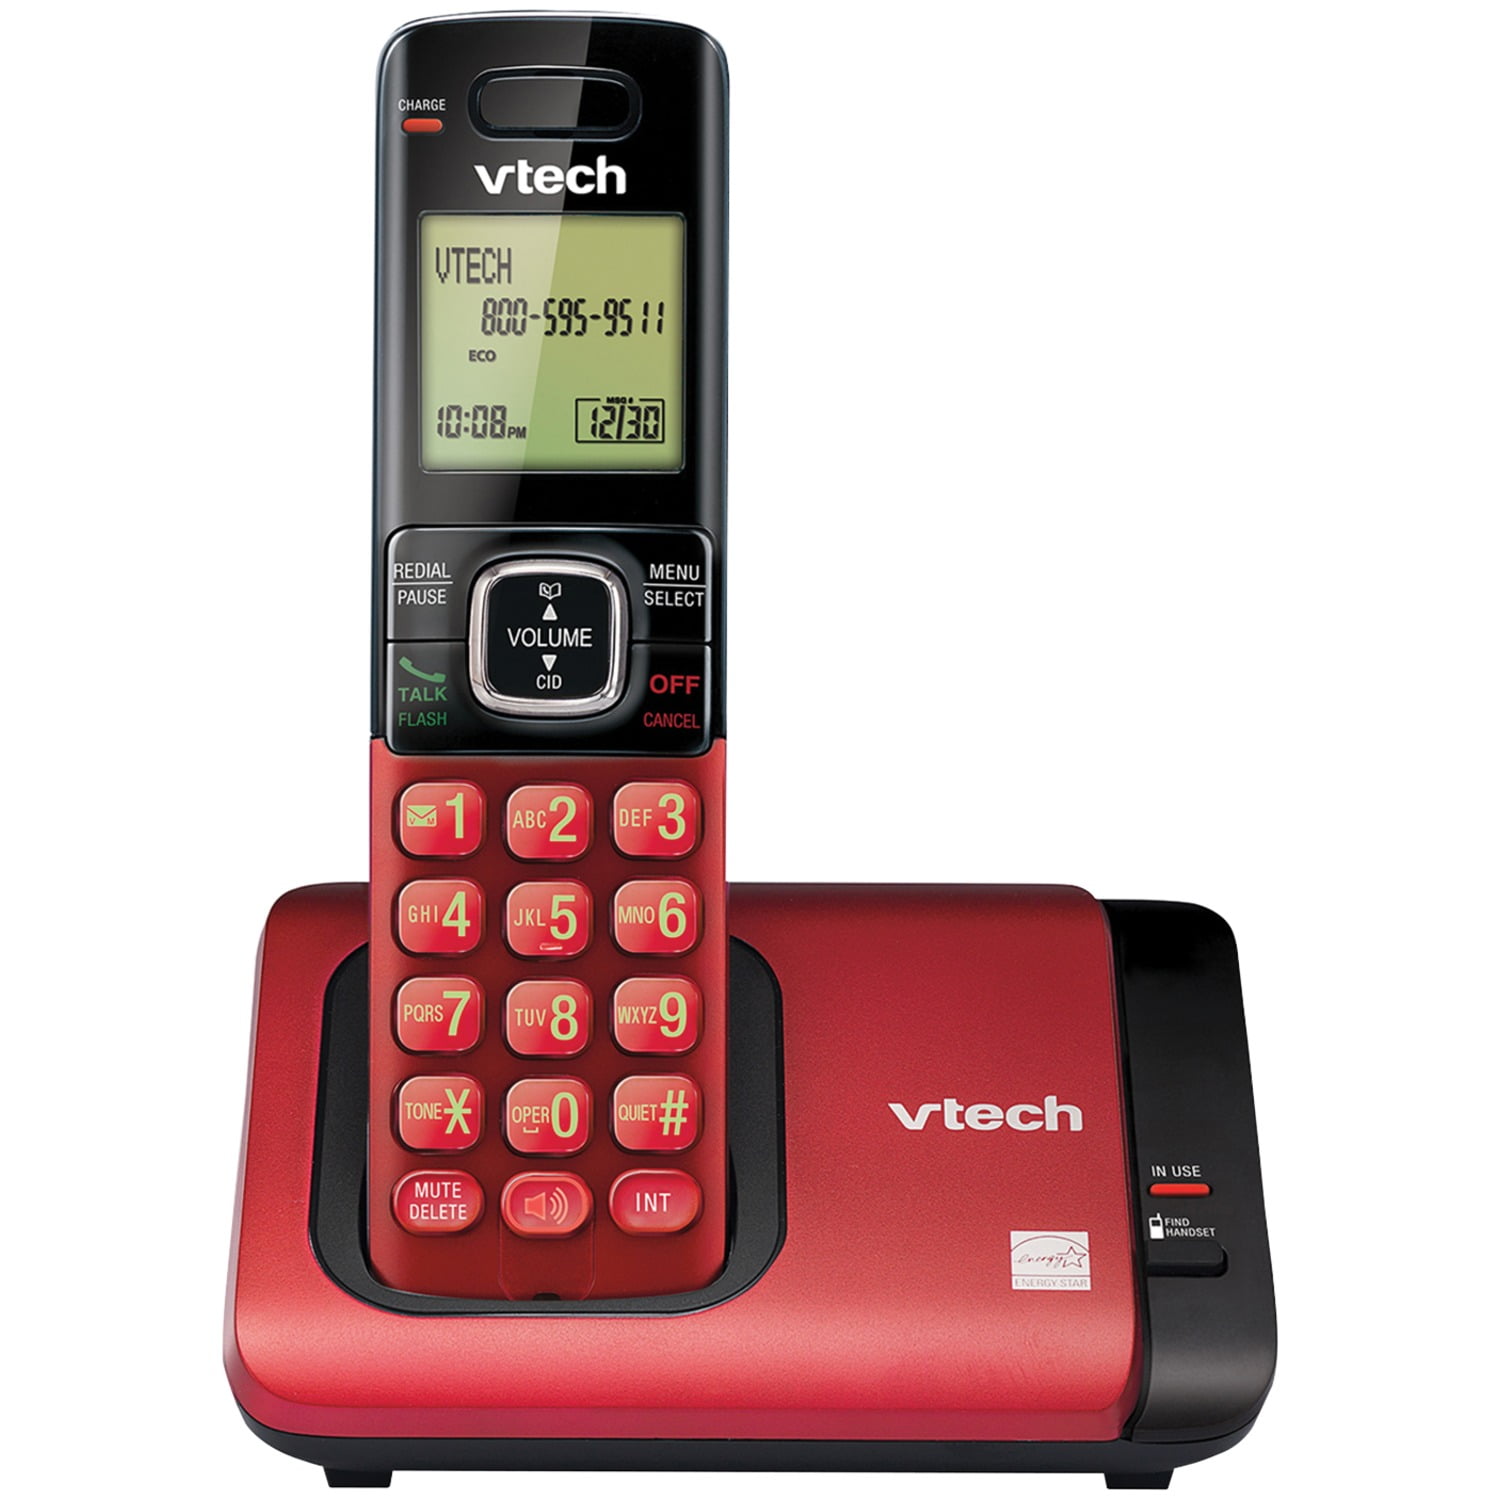 vtech cordless phones